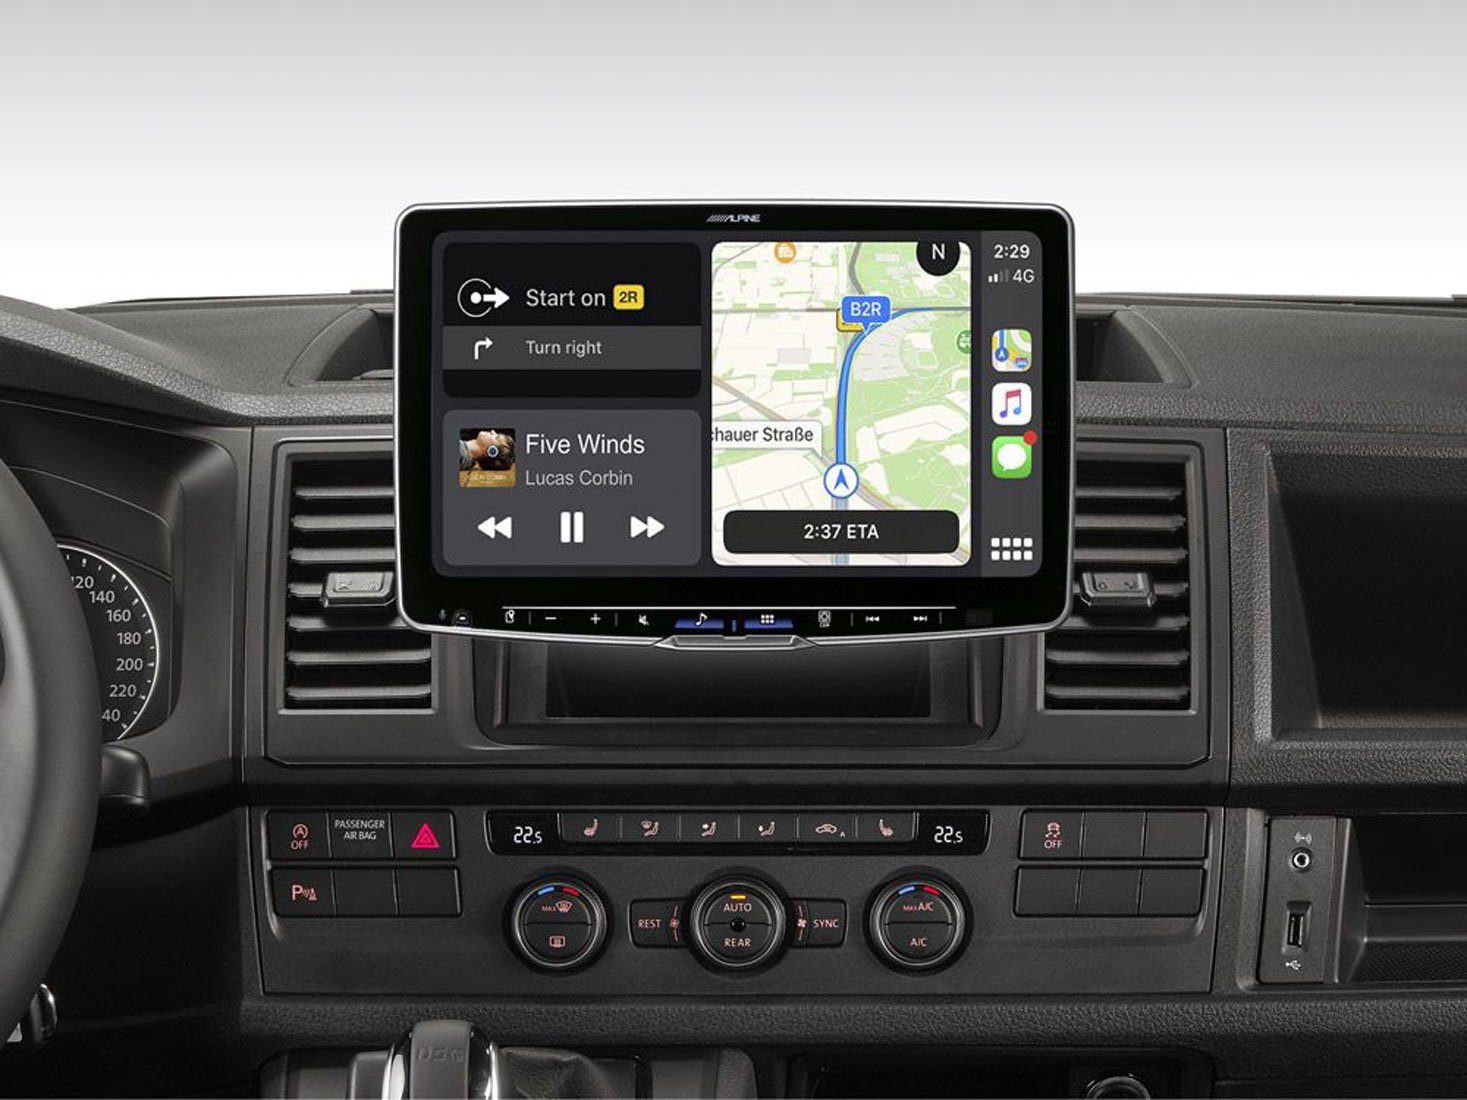 iLX-F115T61 Autoradio Bluetooth Android ALPINE Radio DAB+ T6.1 11-Zoll Volkswagen VW